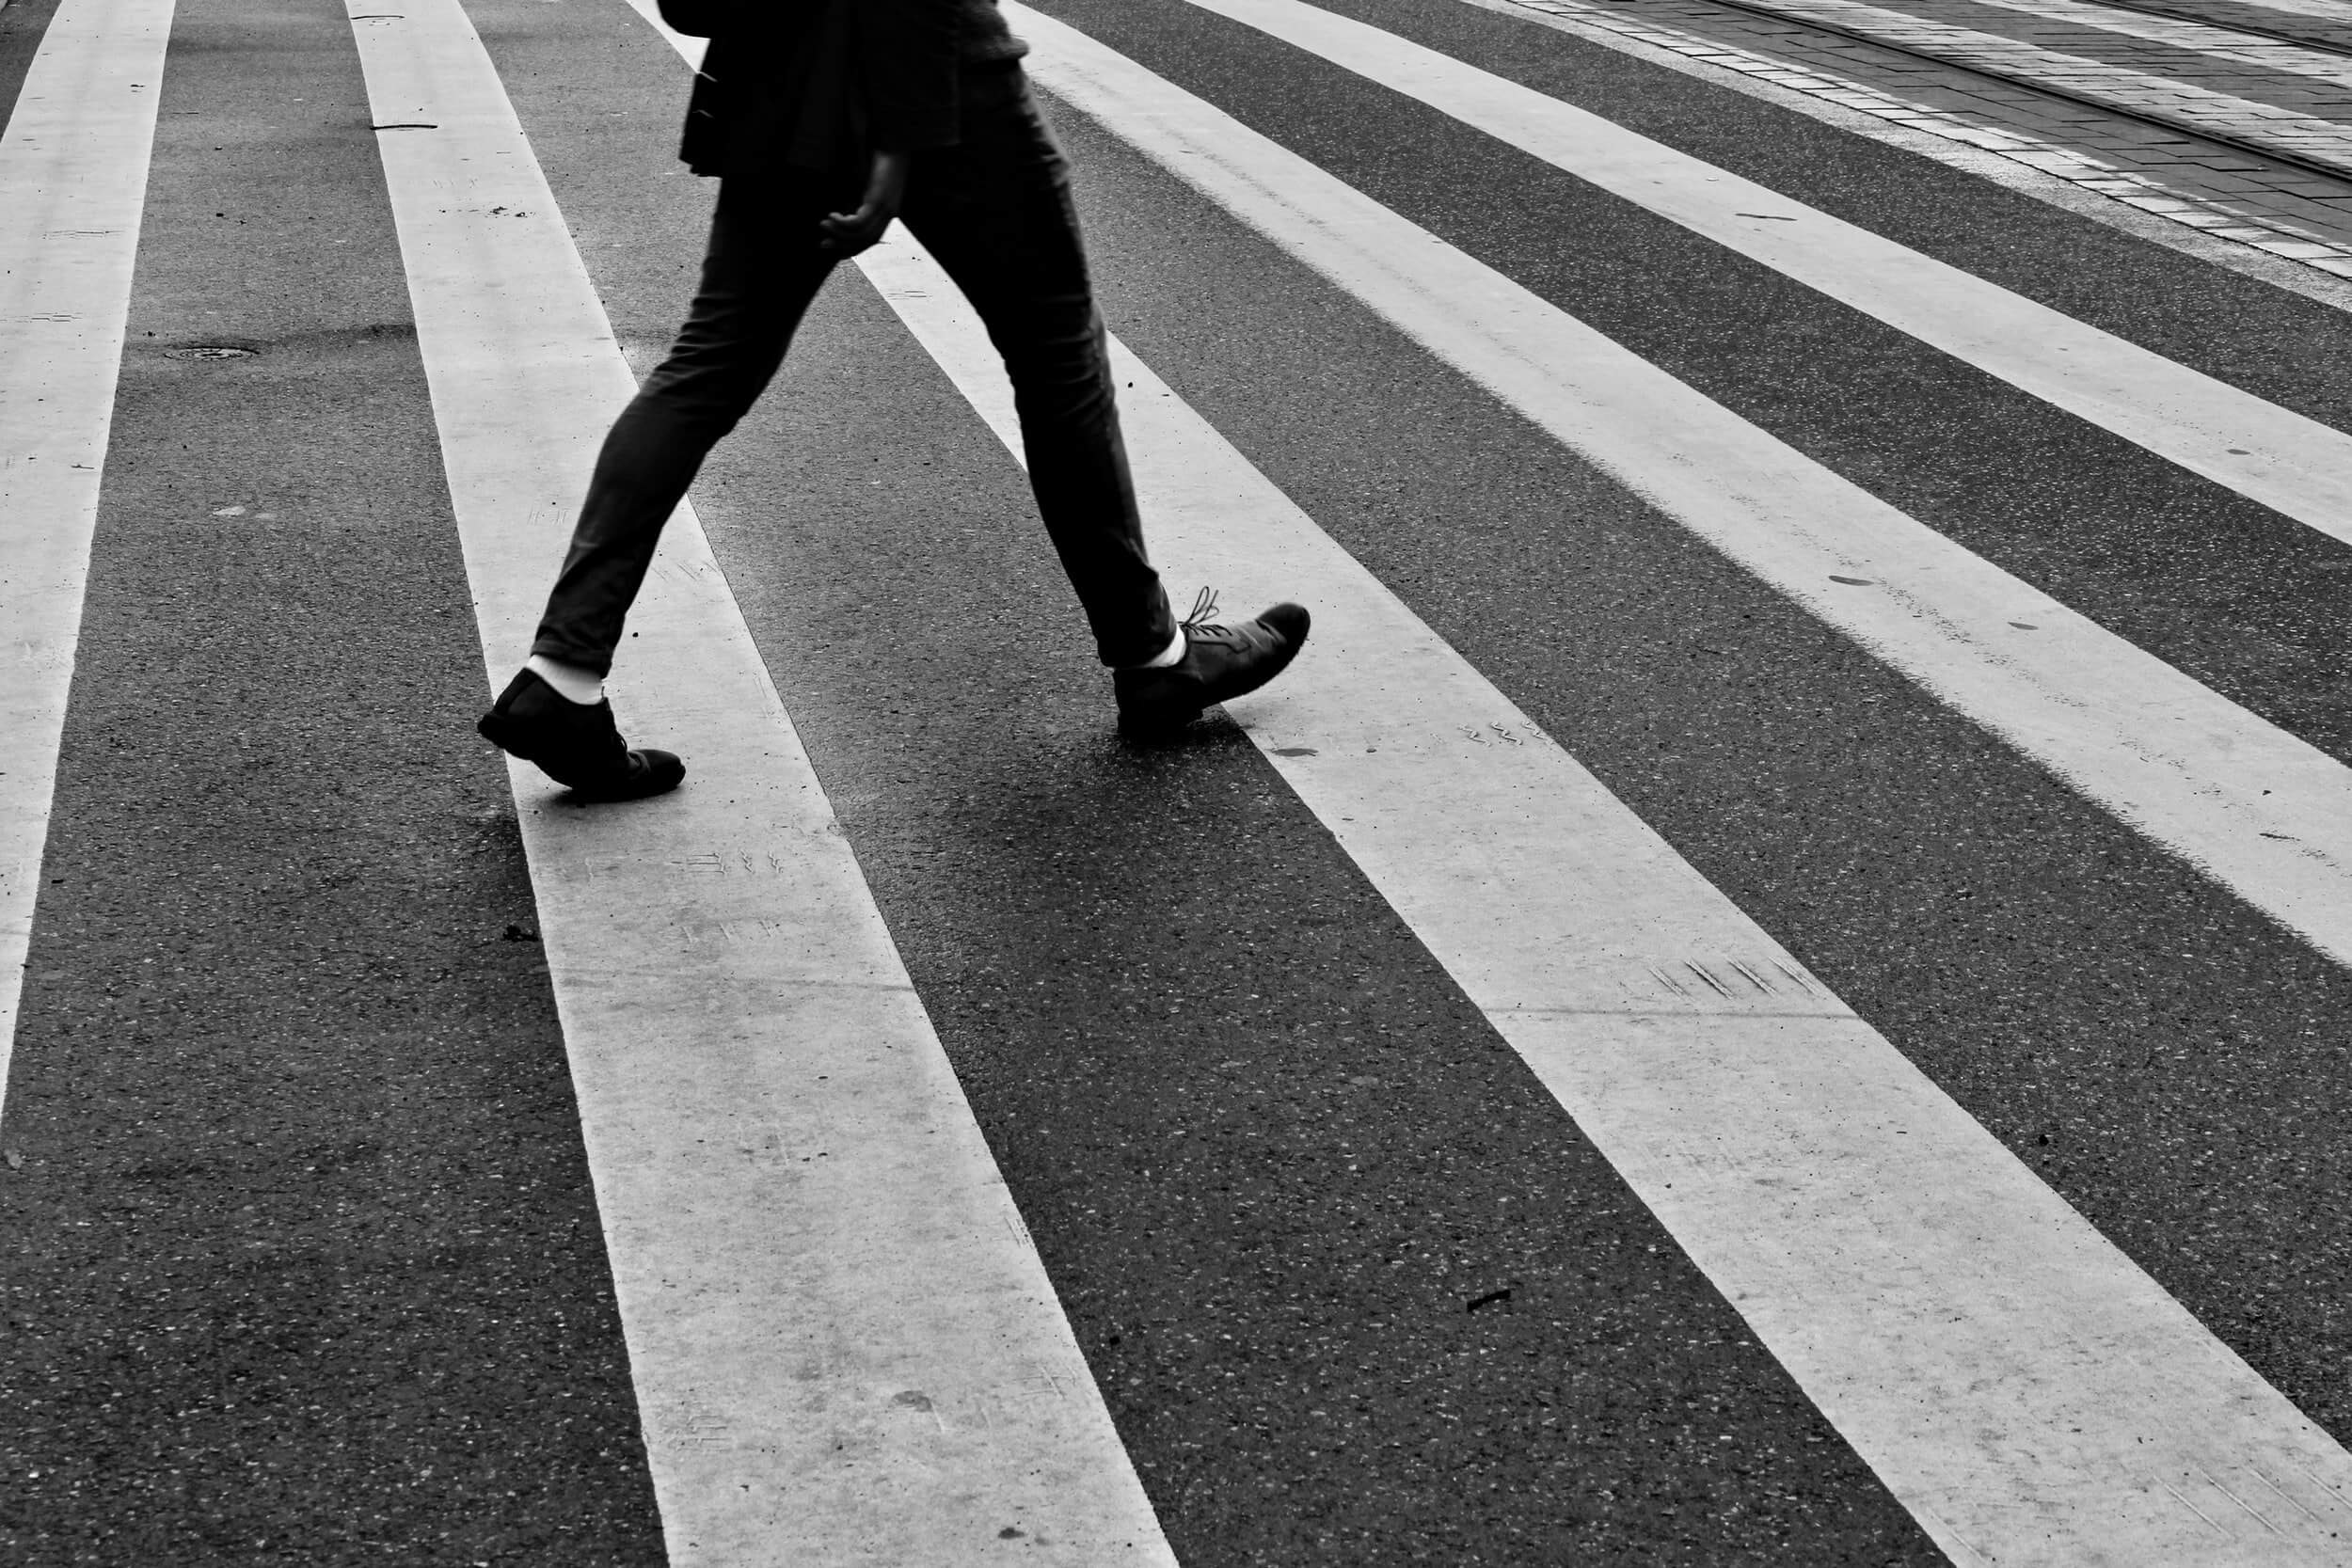 Pedestrian walking